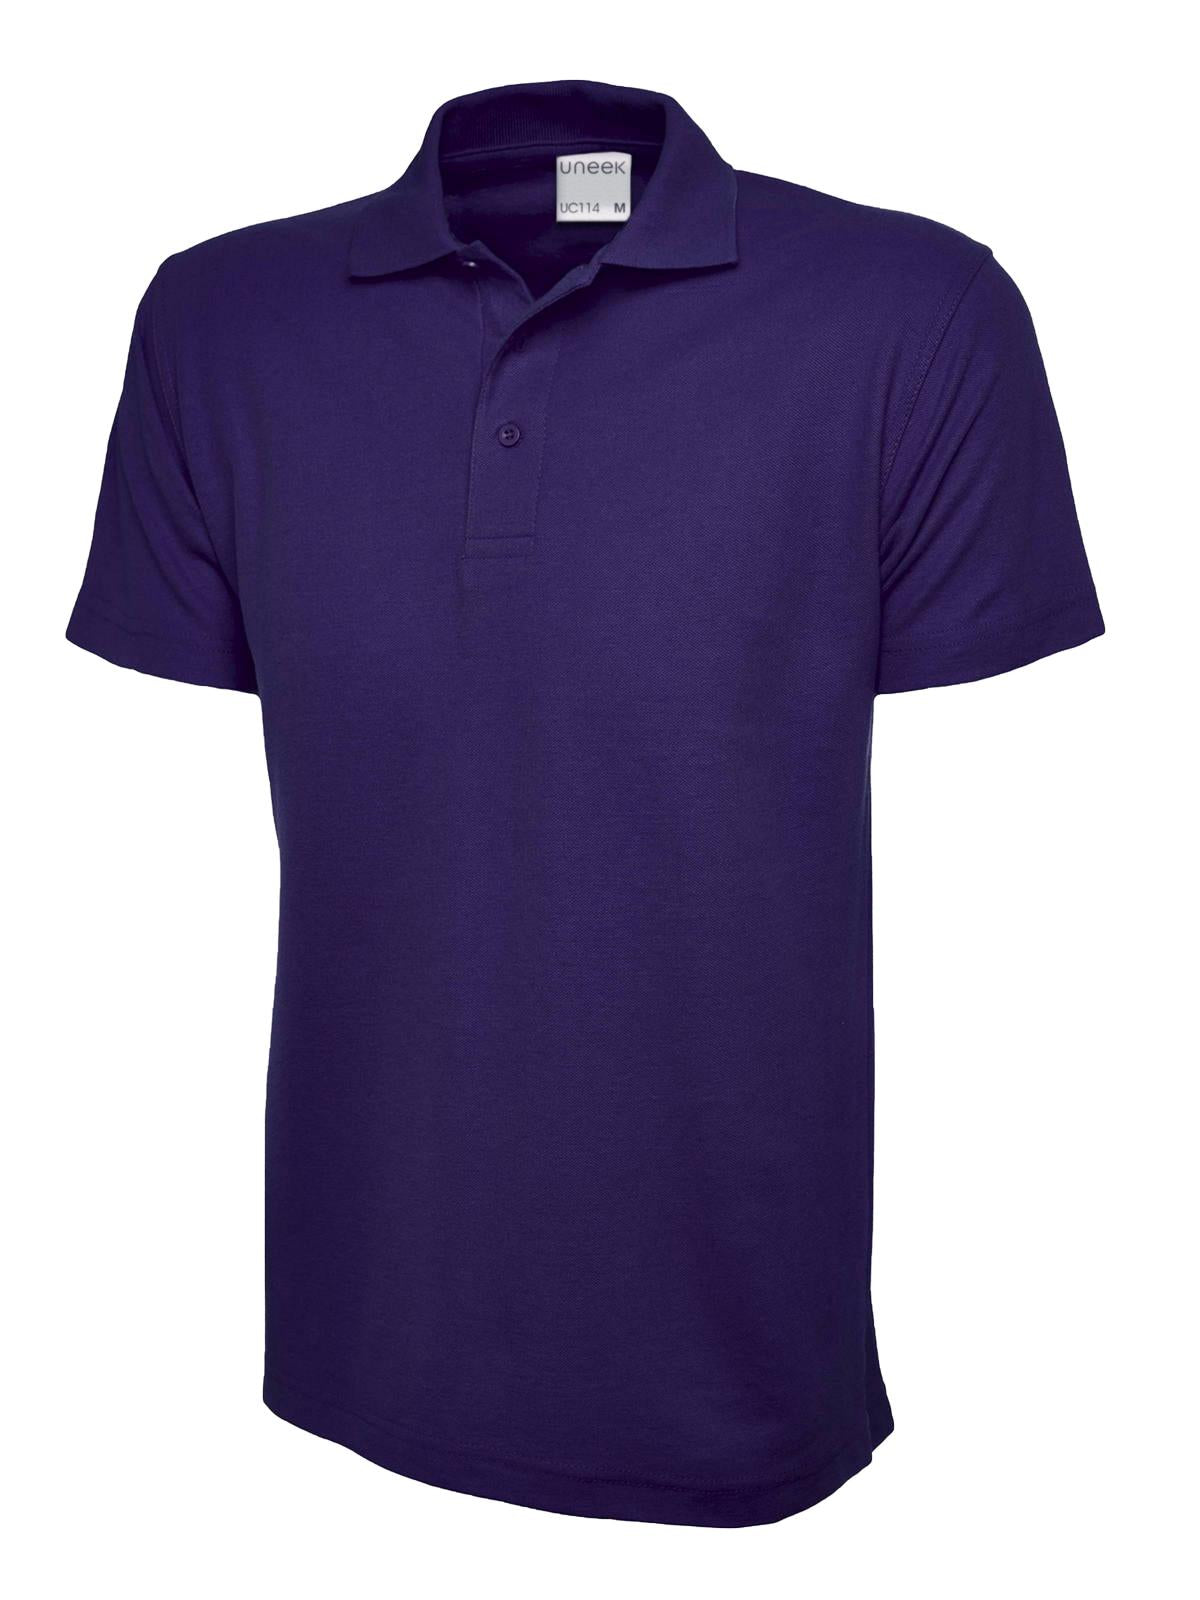 Uneek Men's Ultra Cotton Poloshirt UC114 - Purple